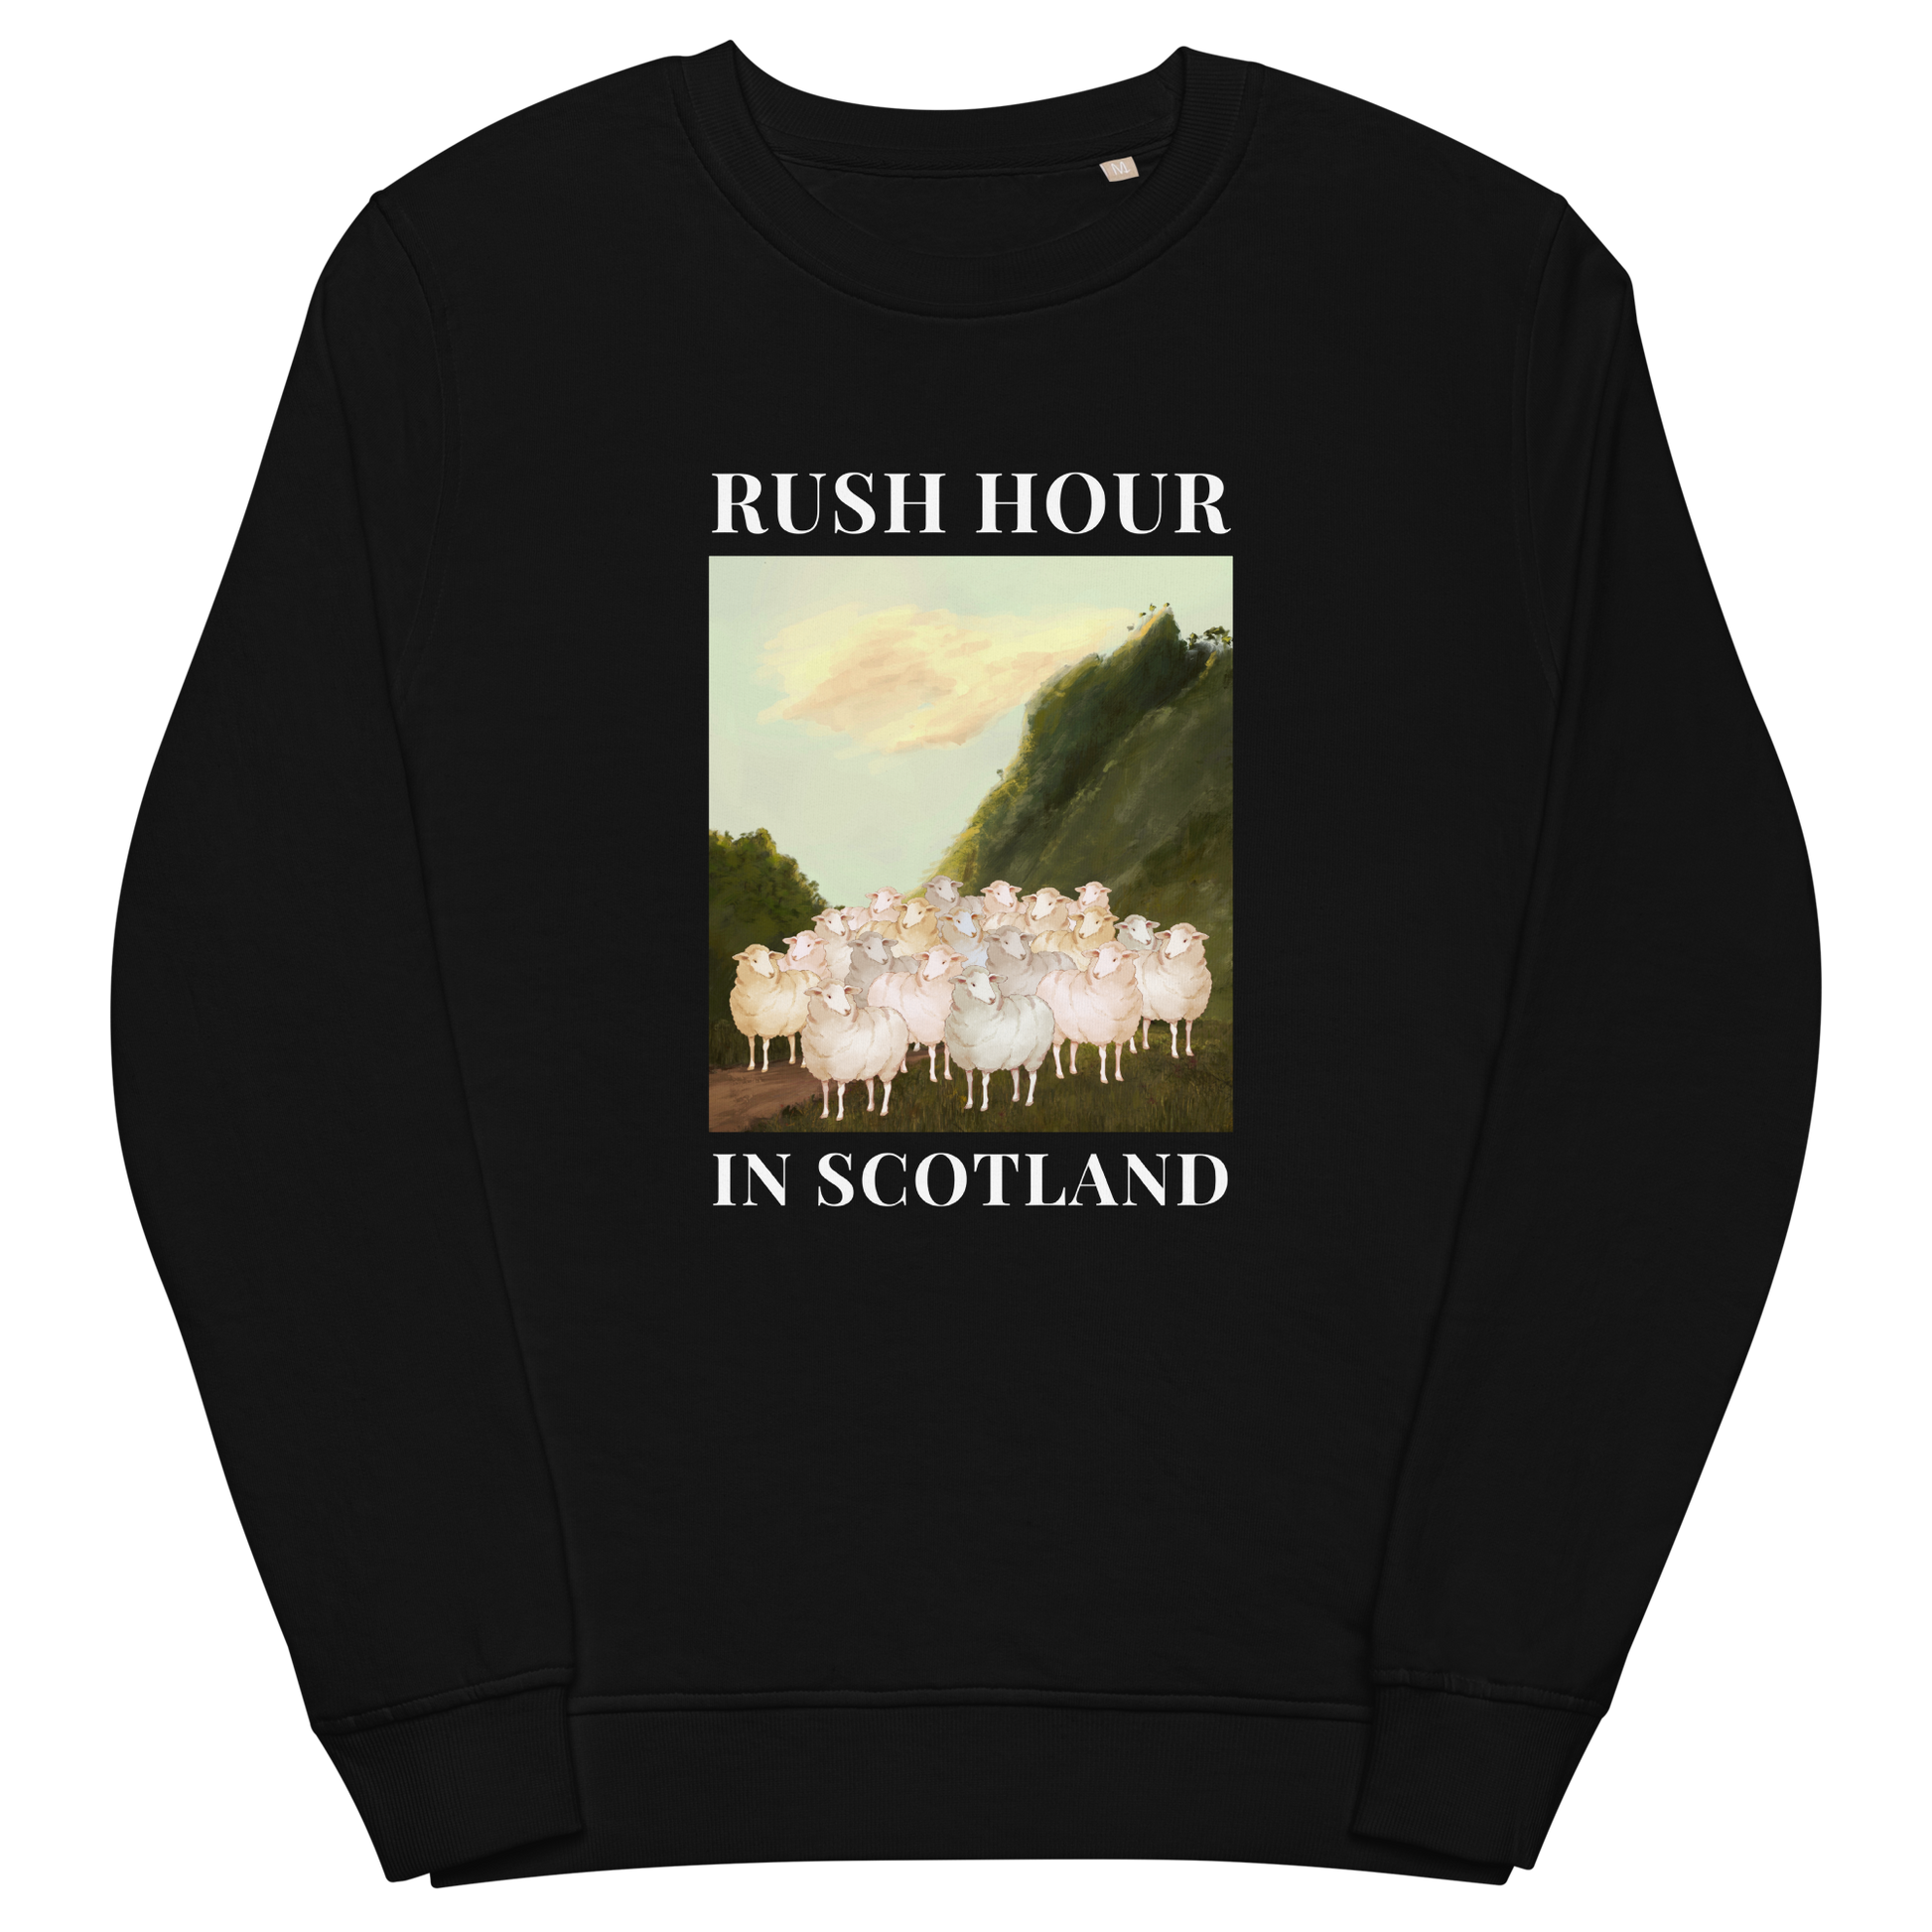 Black Sheep Organic Sweatshirt featuring a comical Rush Hour In Scotland graphic on the chest - Artsy & Funny Graphic Sheep Sweatshirts - Boozy Fox